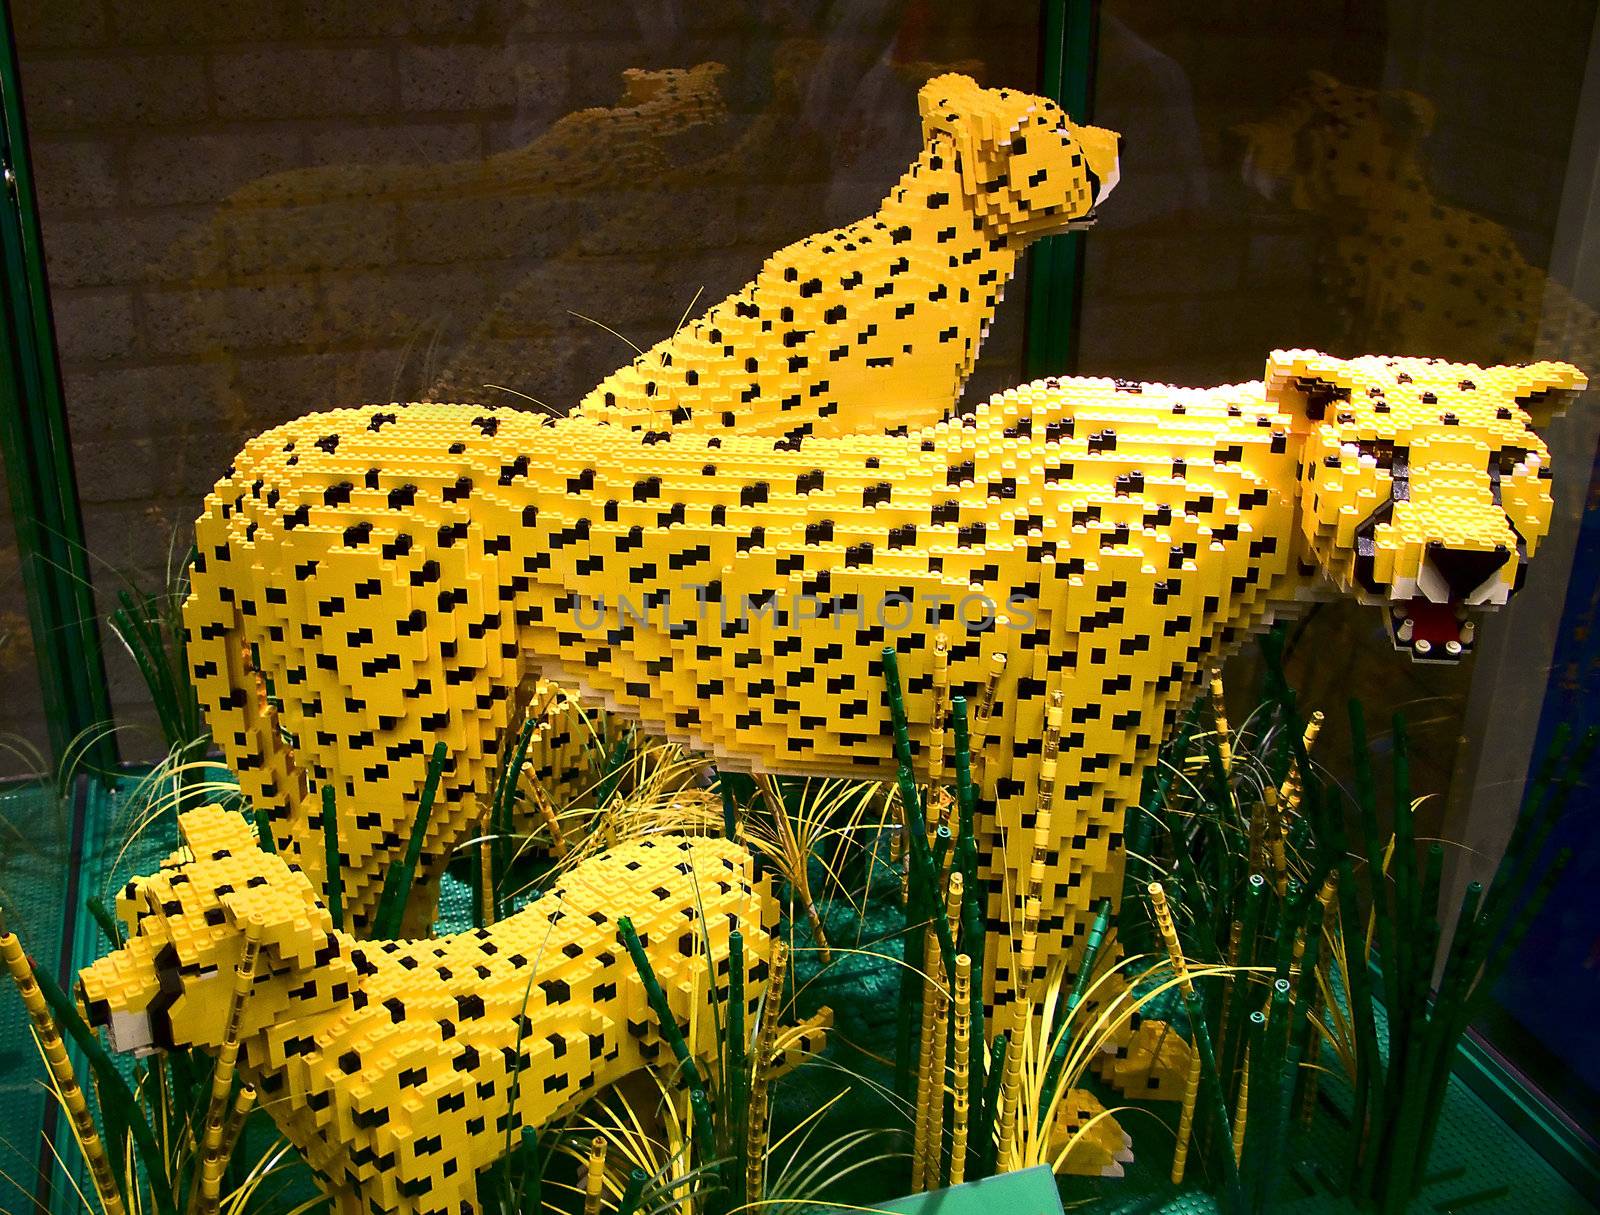 Three yellow cheetahs made of lego